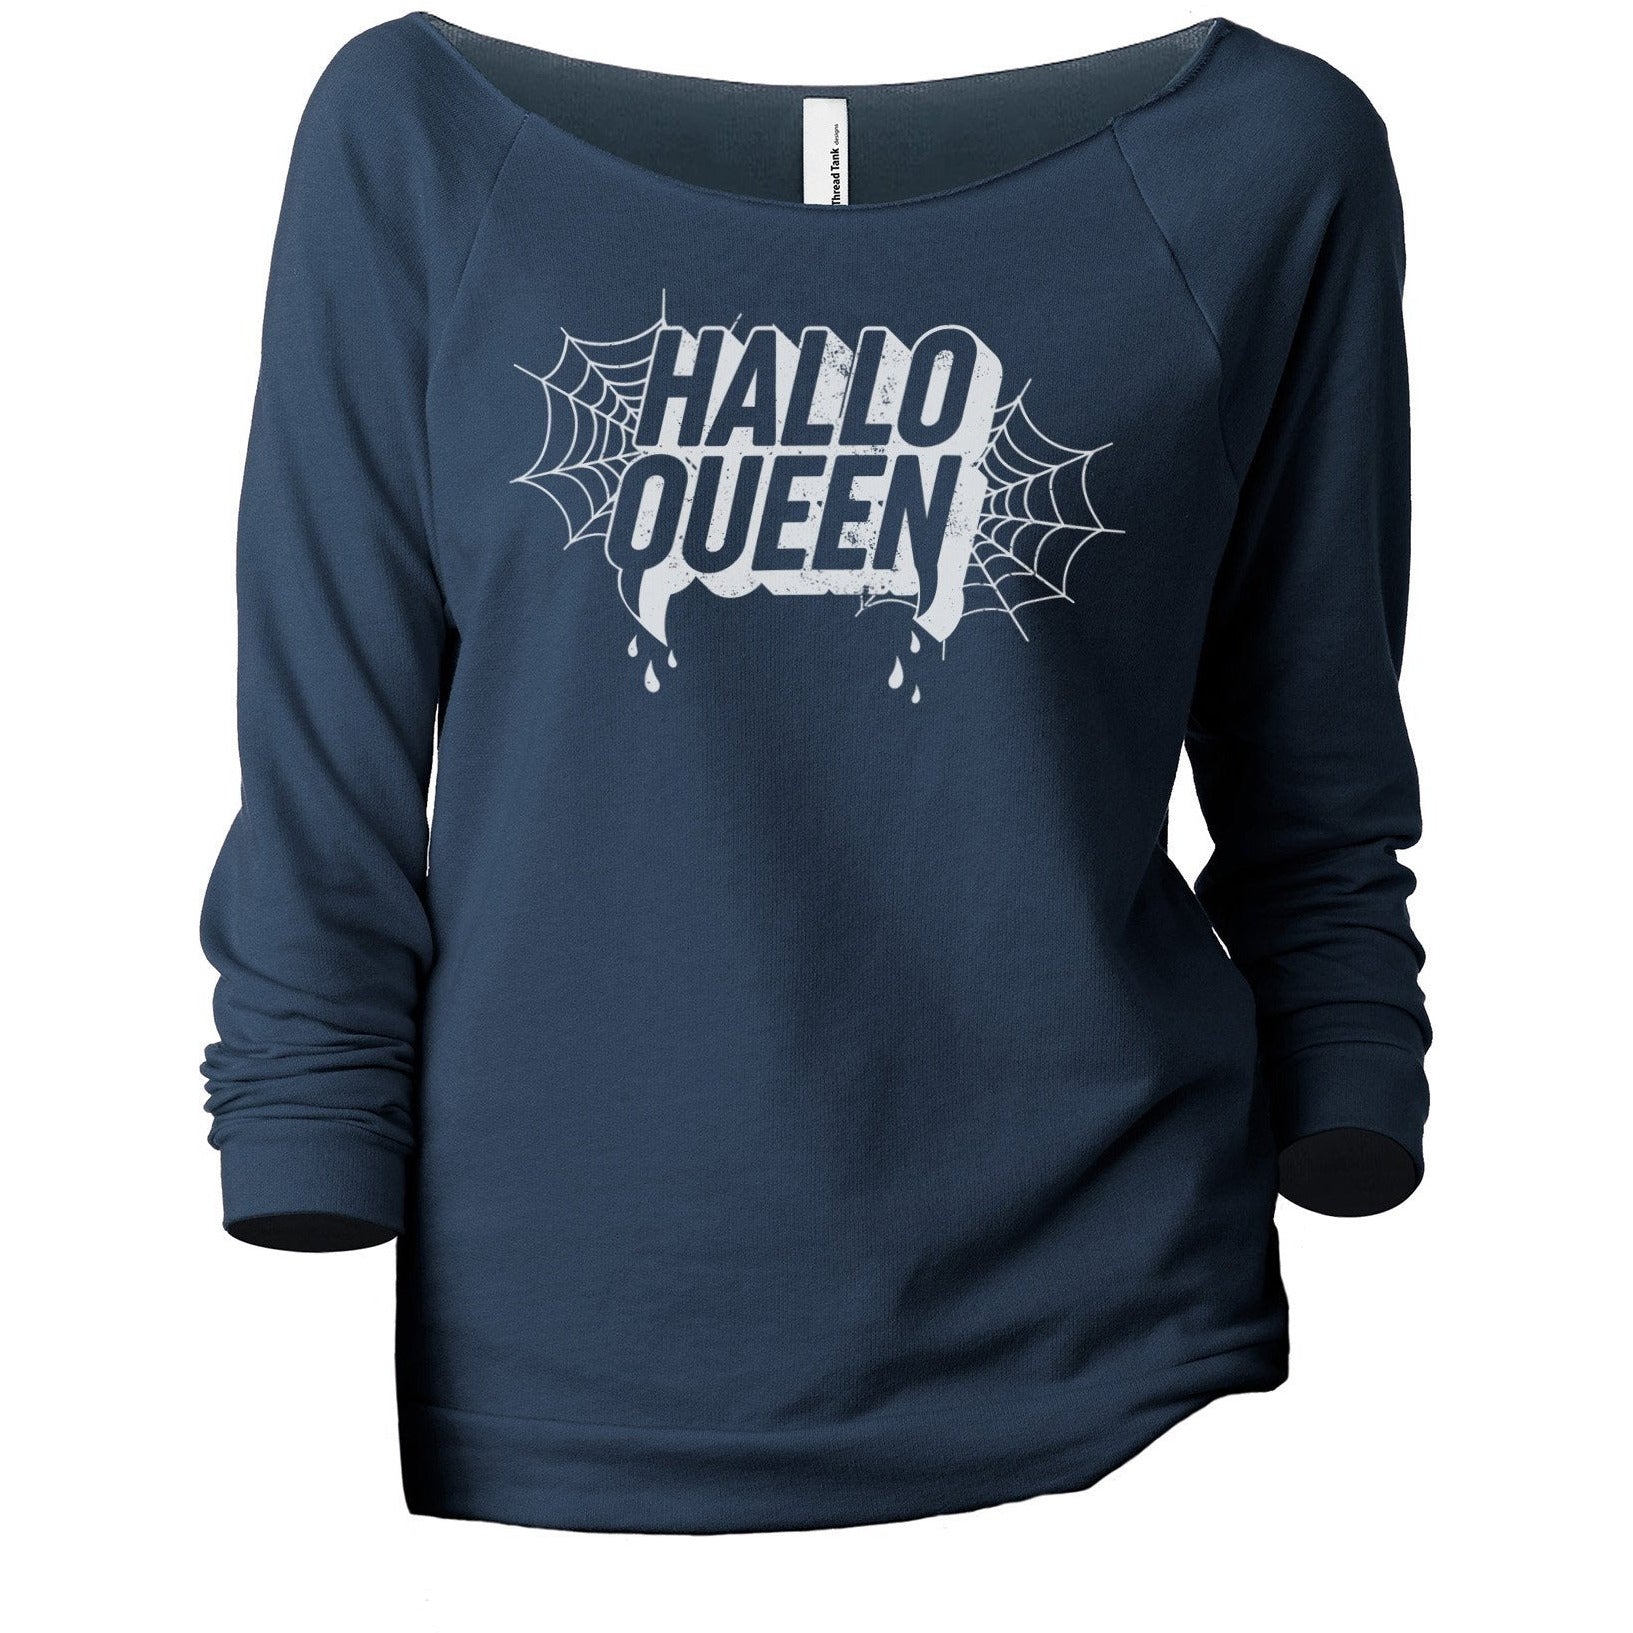 Hallo Queen Women's Graphic Printed Lightweight Slouchy 3/4 Sleeves Sweatshirt Navy